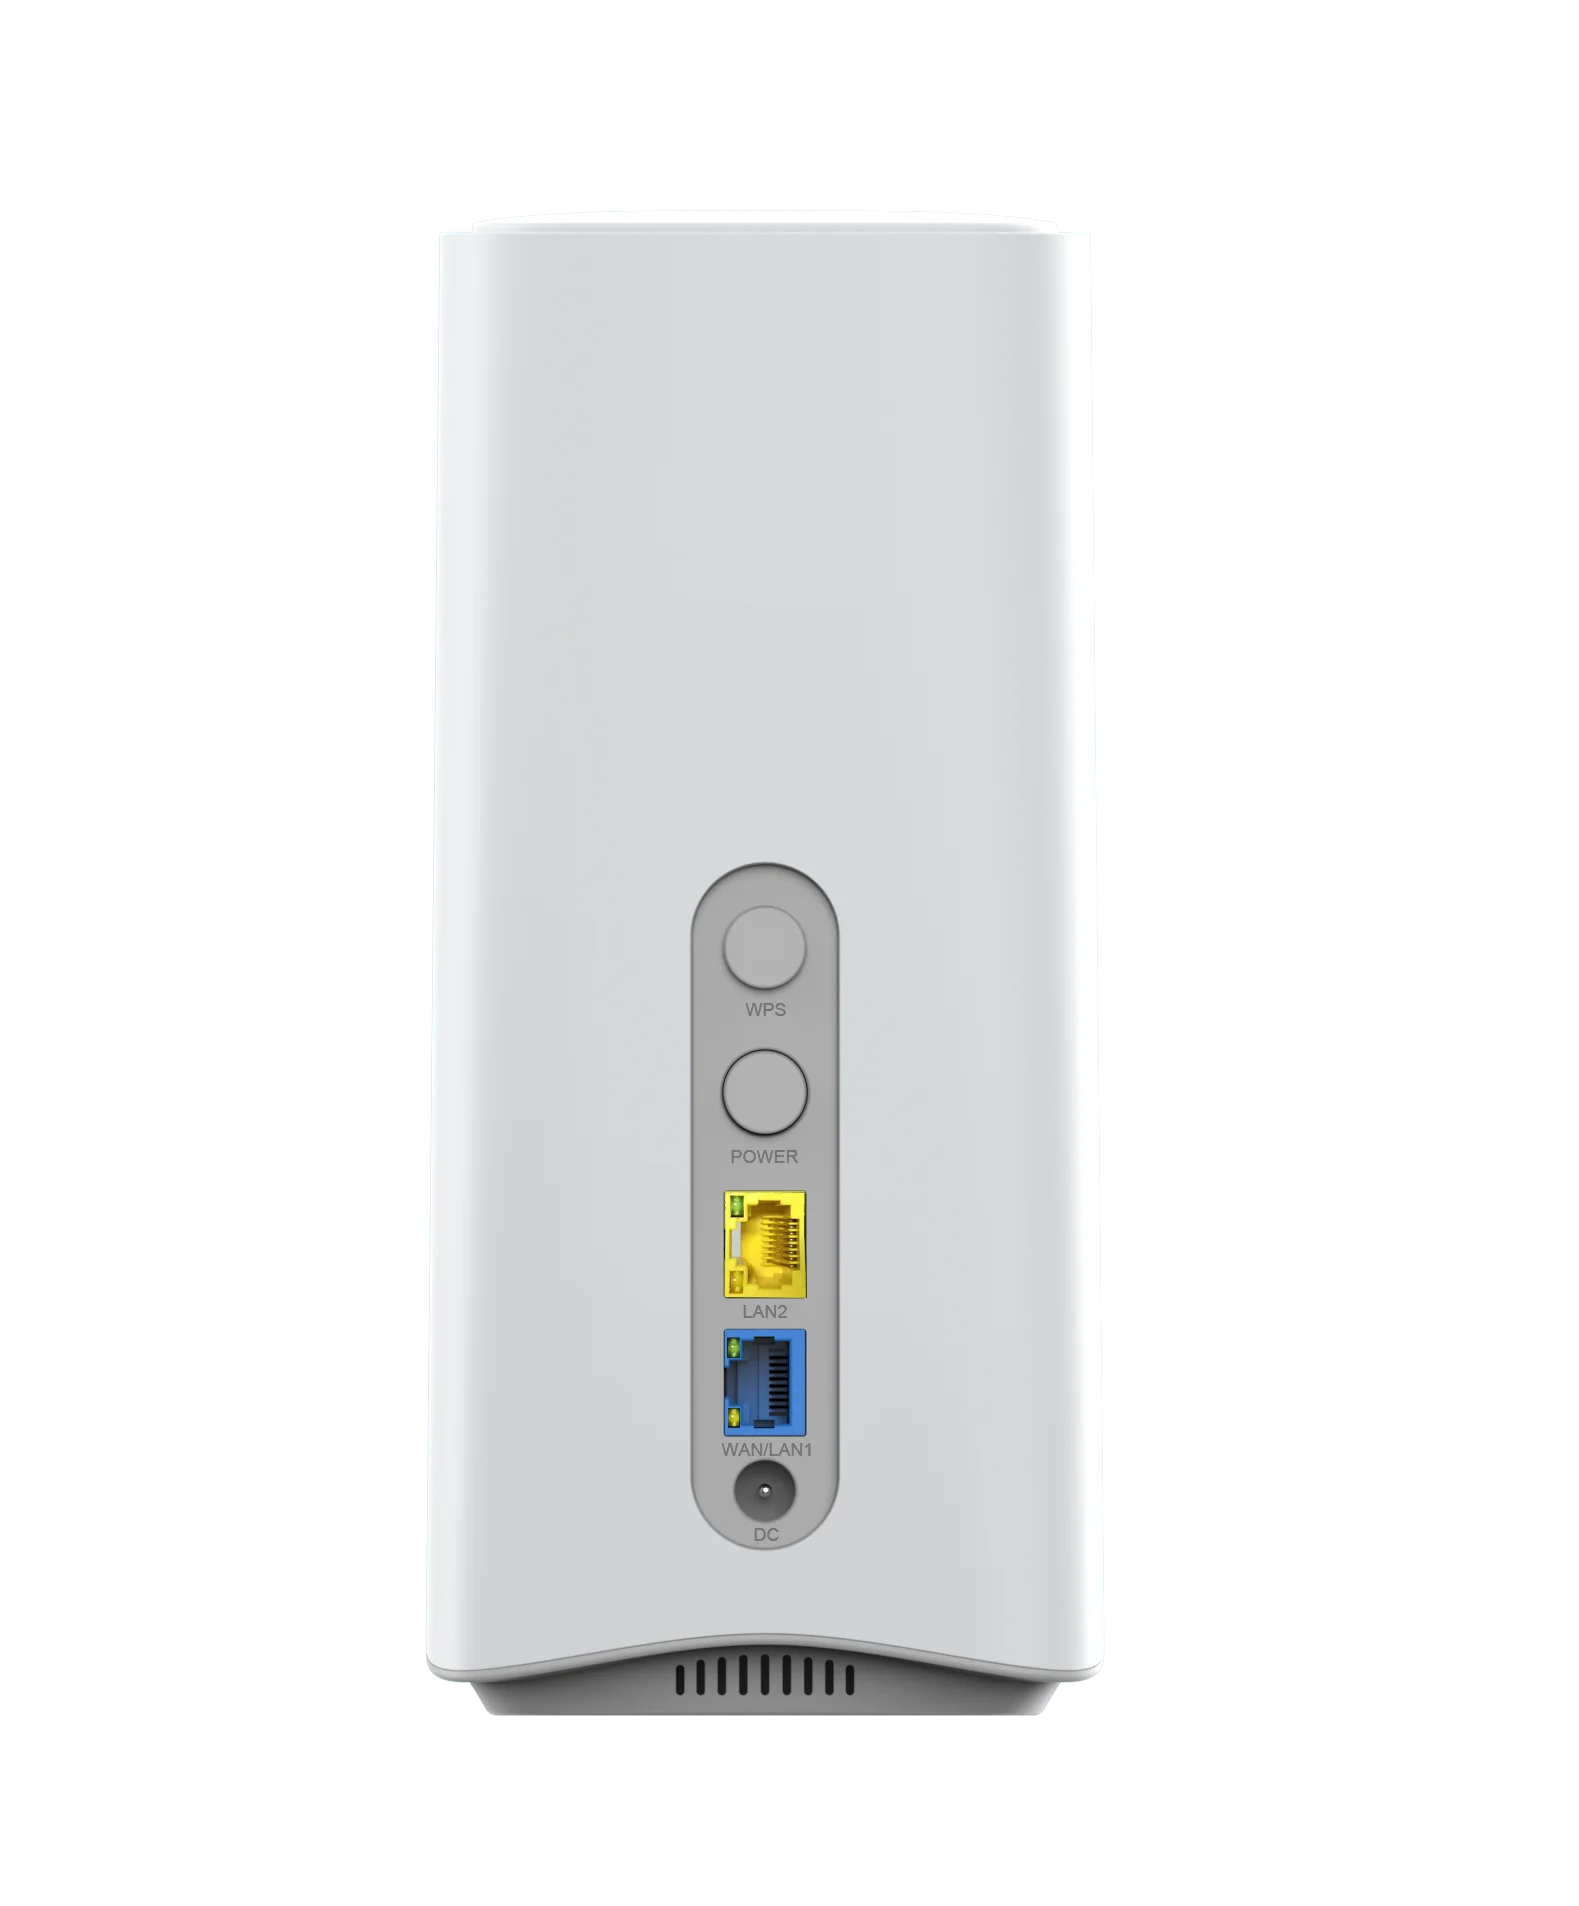 Stavix 5G CPE Wifi Unlock 5db Wifi Network Routers Modem Home Top 5 Wireless Travel  Router Wifi Wireless